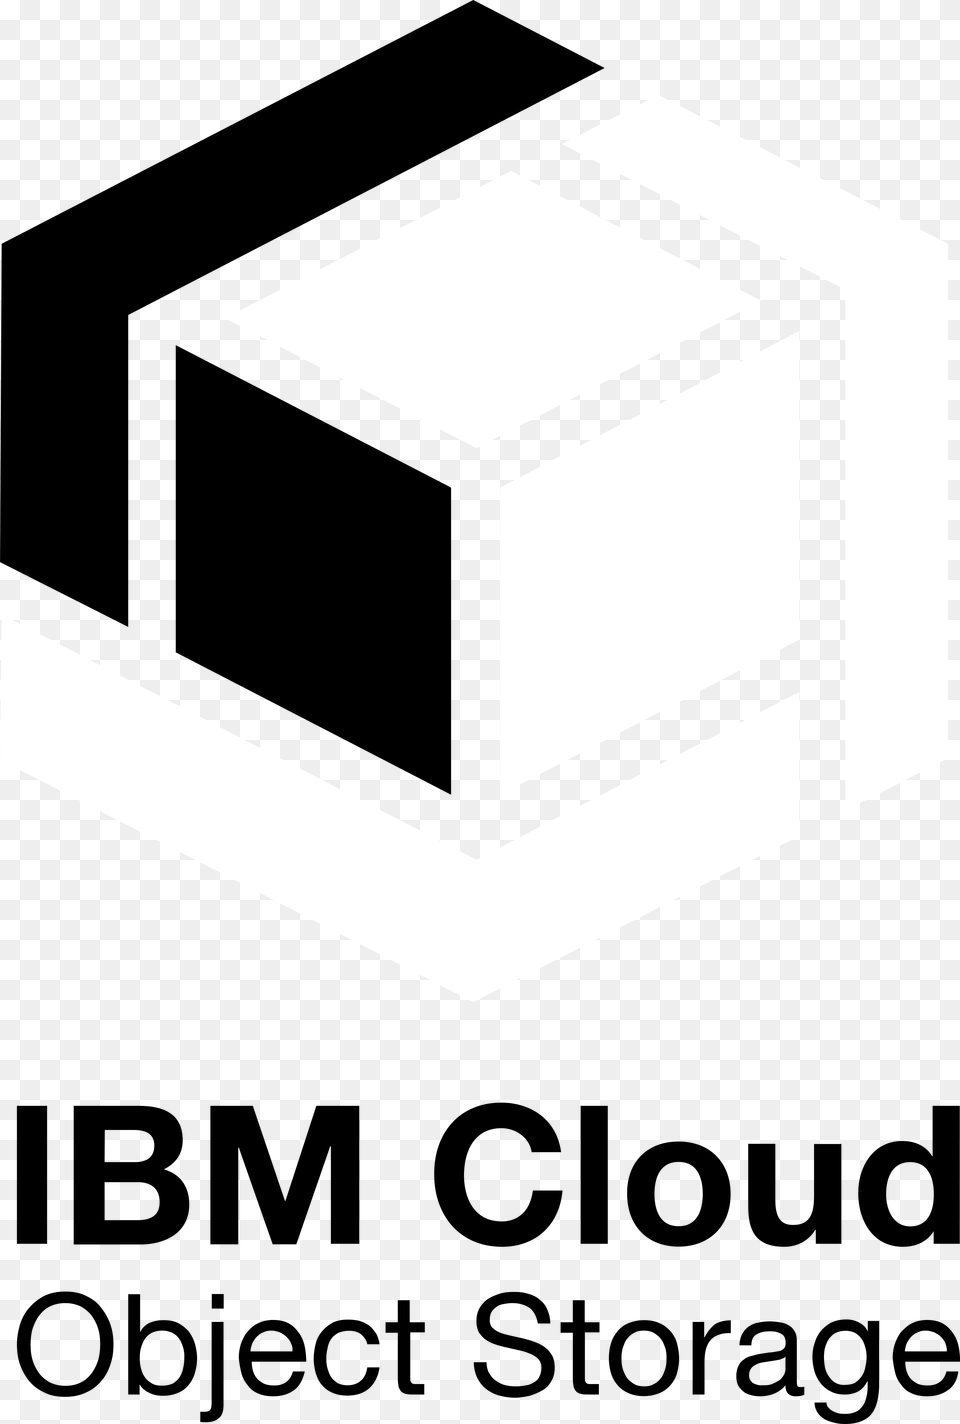 Ibm Cloud Object Storage Logo Black And White Ibm Cloud Object Storage Logo Free Png